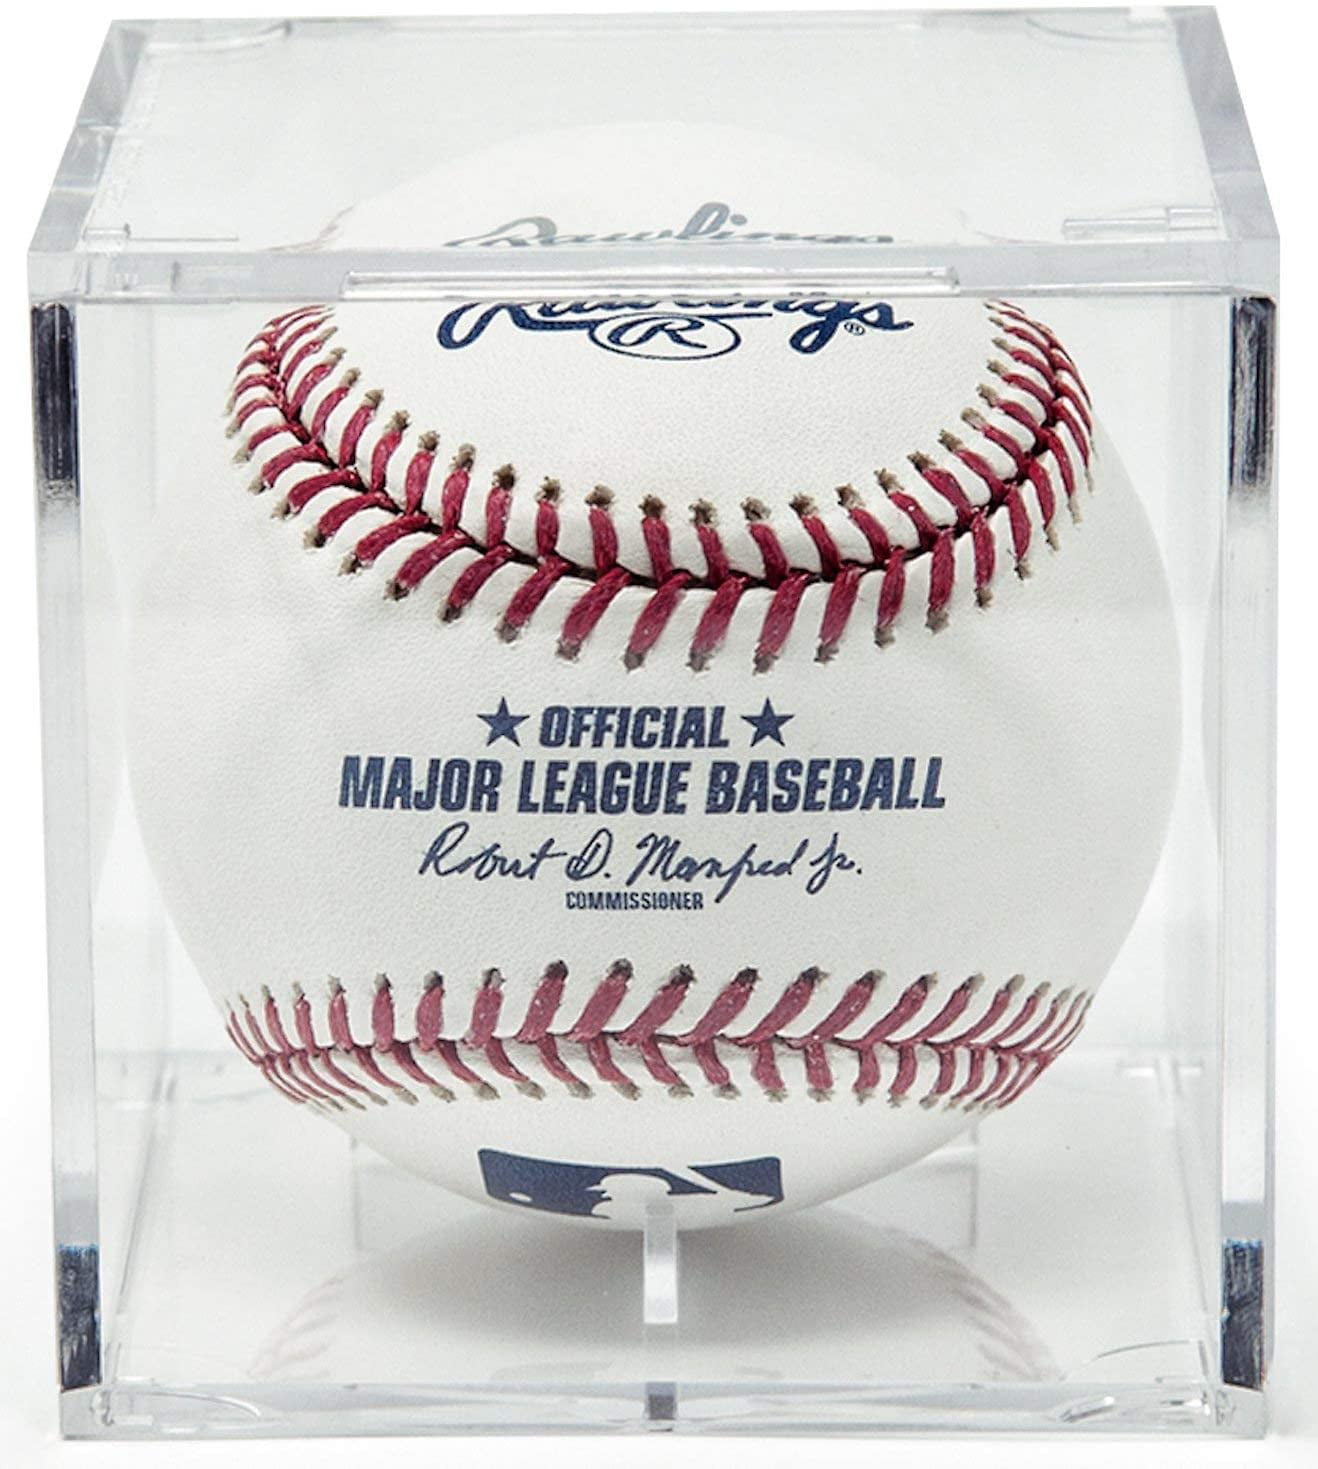 UV Protected Acrylic Square Baseball Holder Clear Cube Autograph Memorabilia Ball Display Cases Official Size Baseball Display Box VOLEAAR Baseball Display Case 